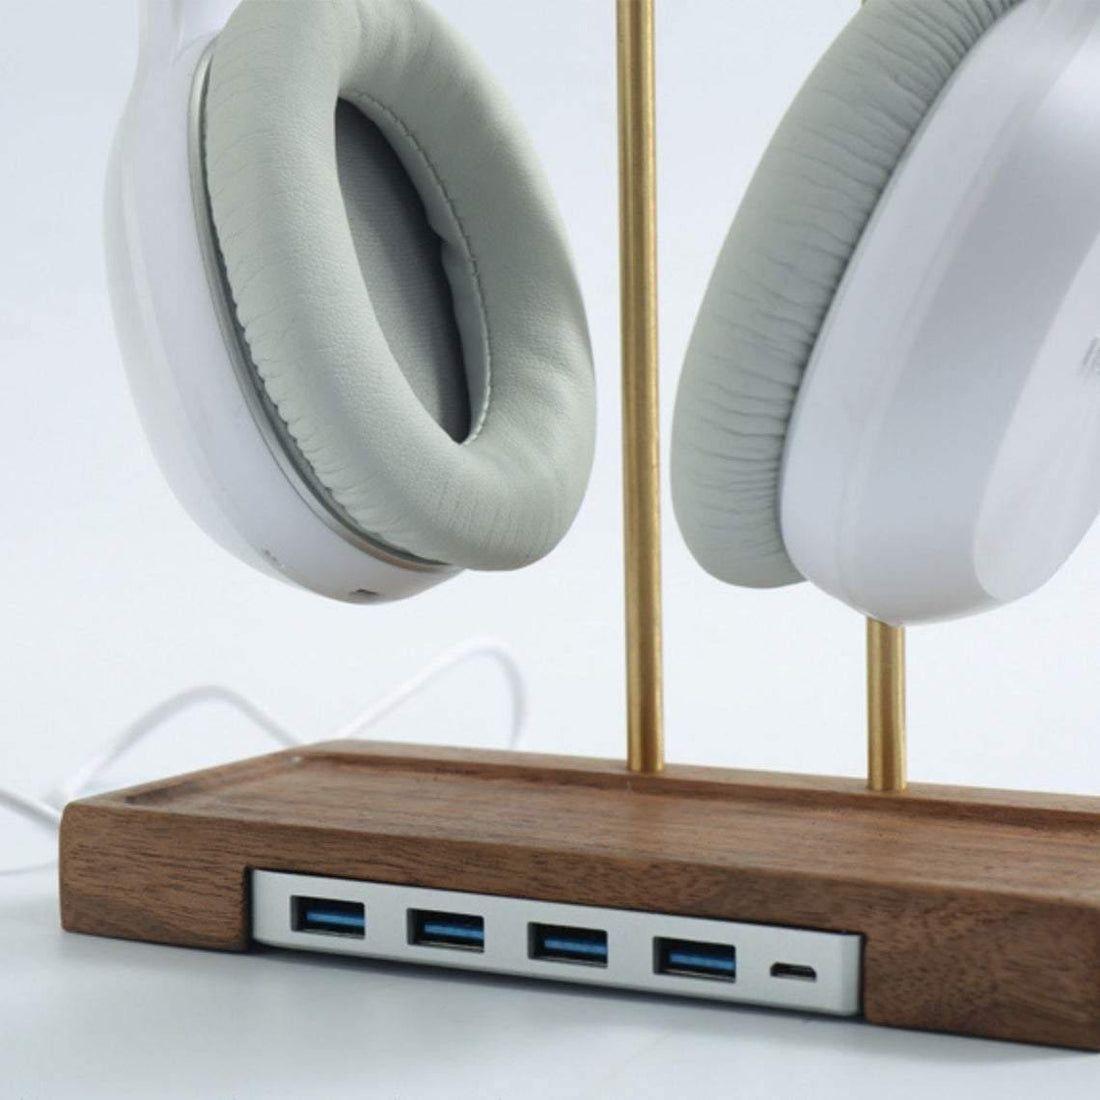 Stylish Earphone Stand with USB Ports - iWoodStore